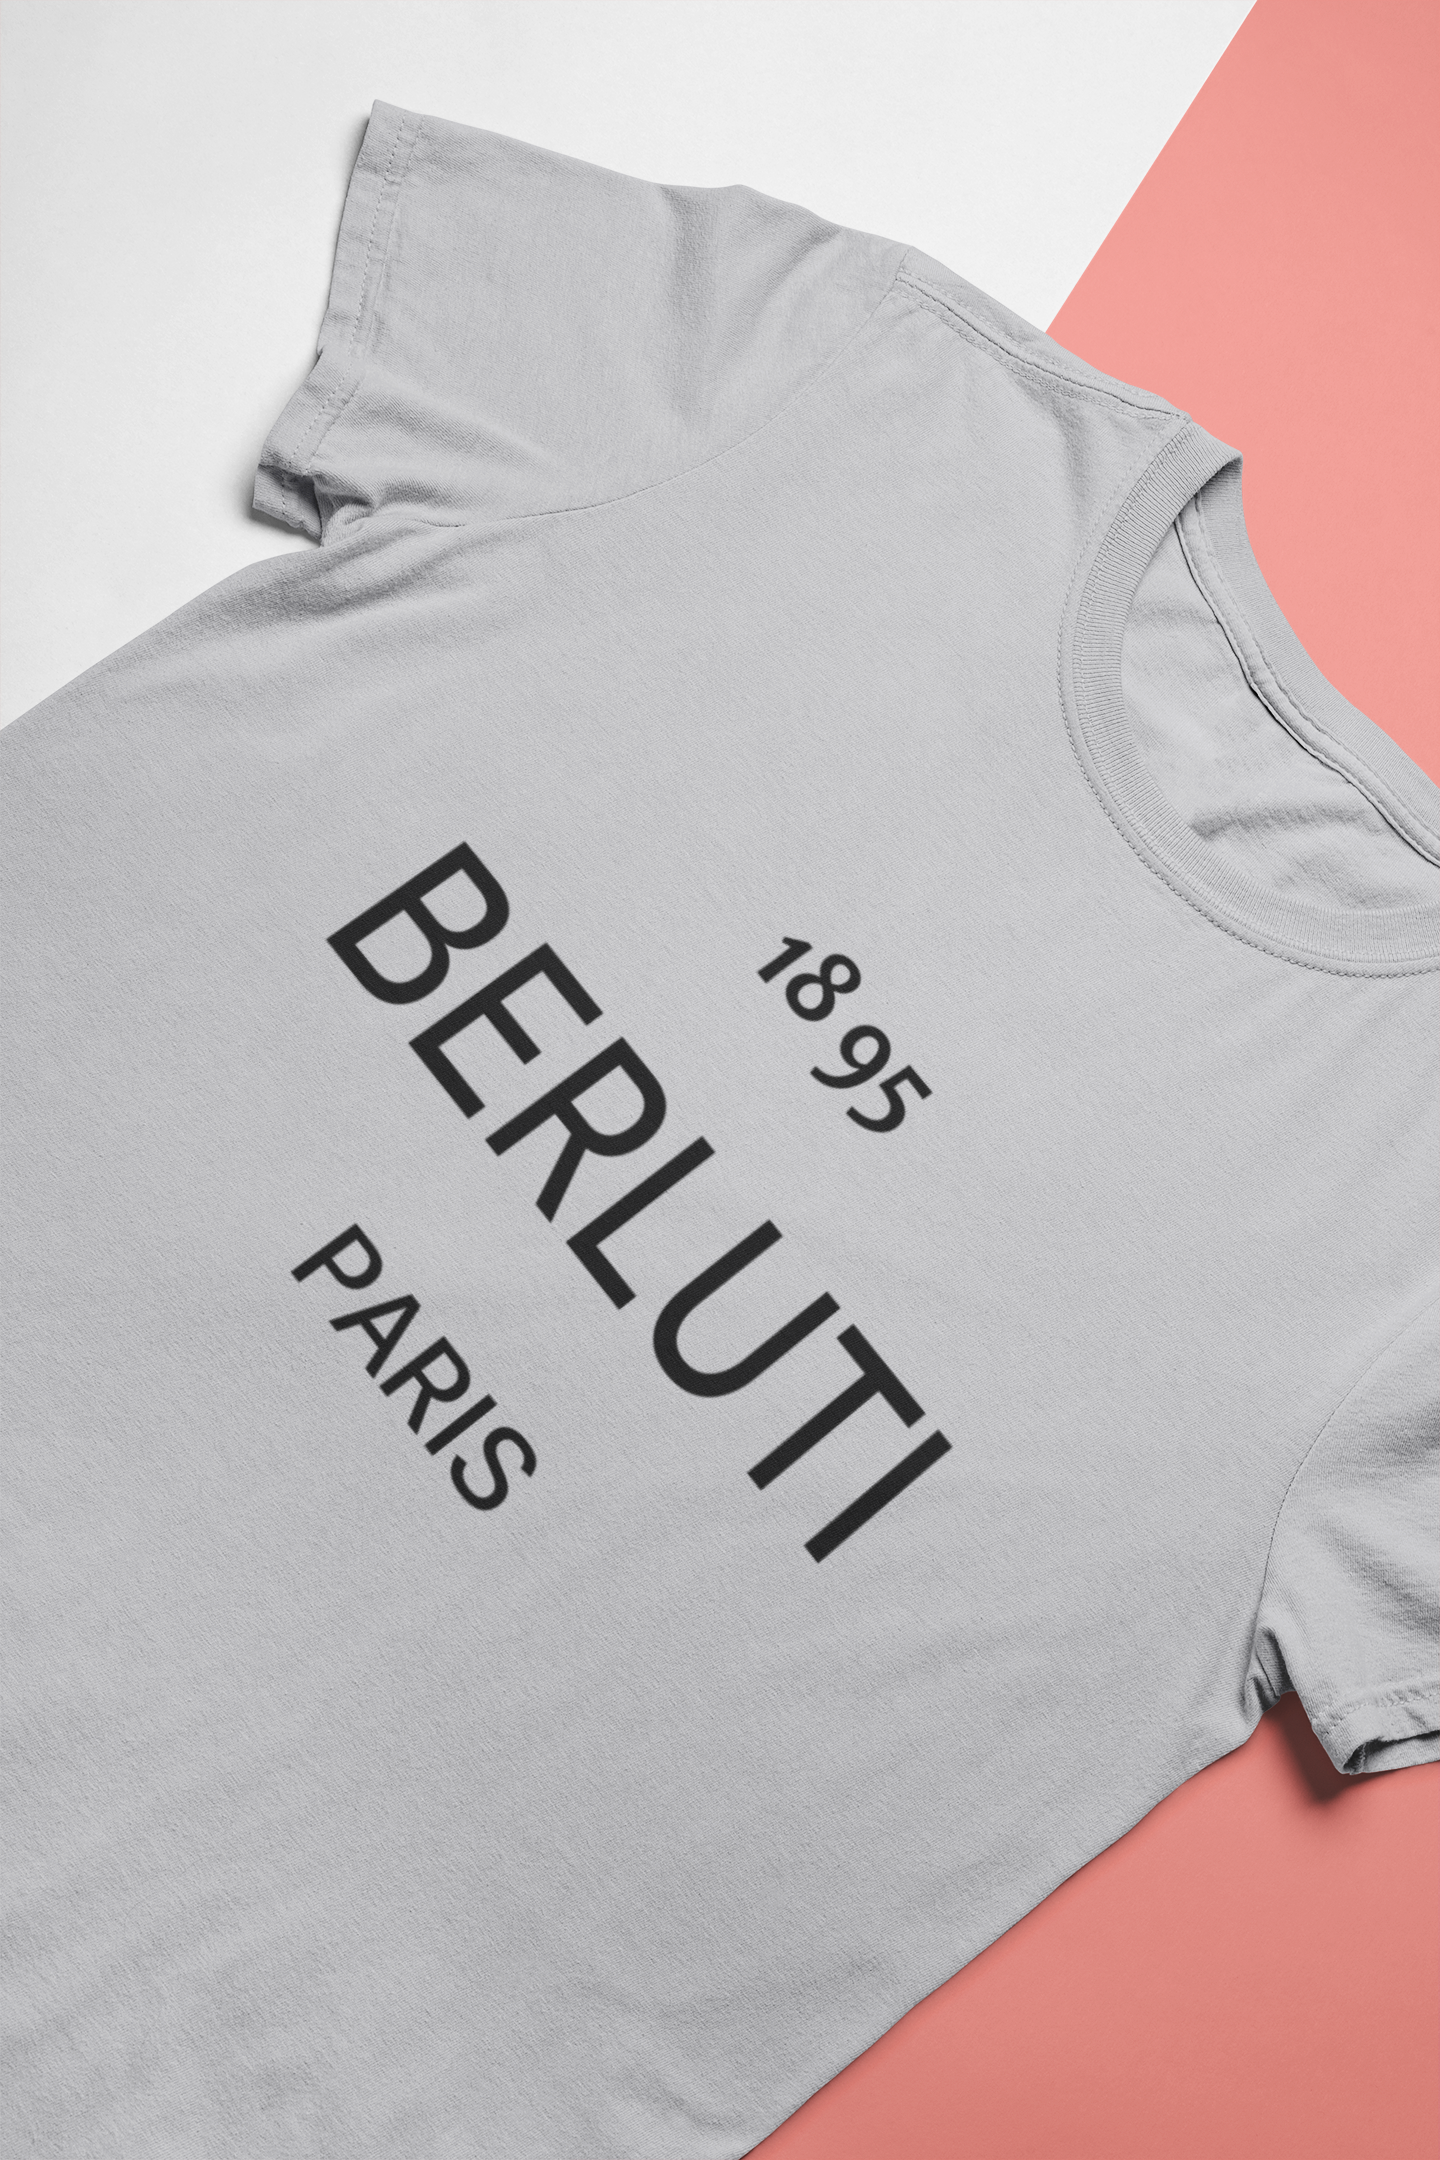 Berluti Paris Gigi Hadid Celebrity T-shirt- FunkyTeesClub